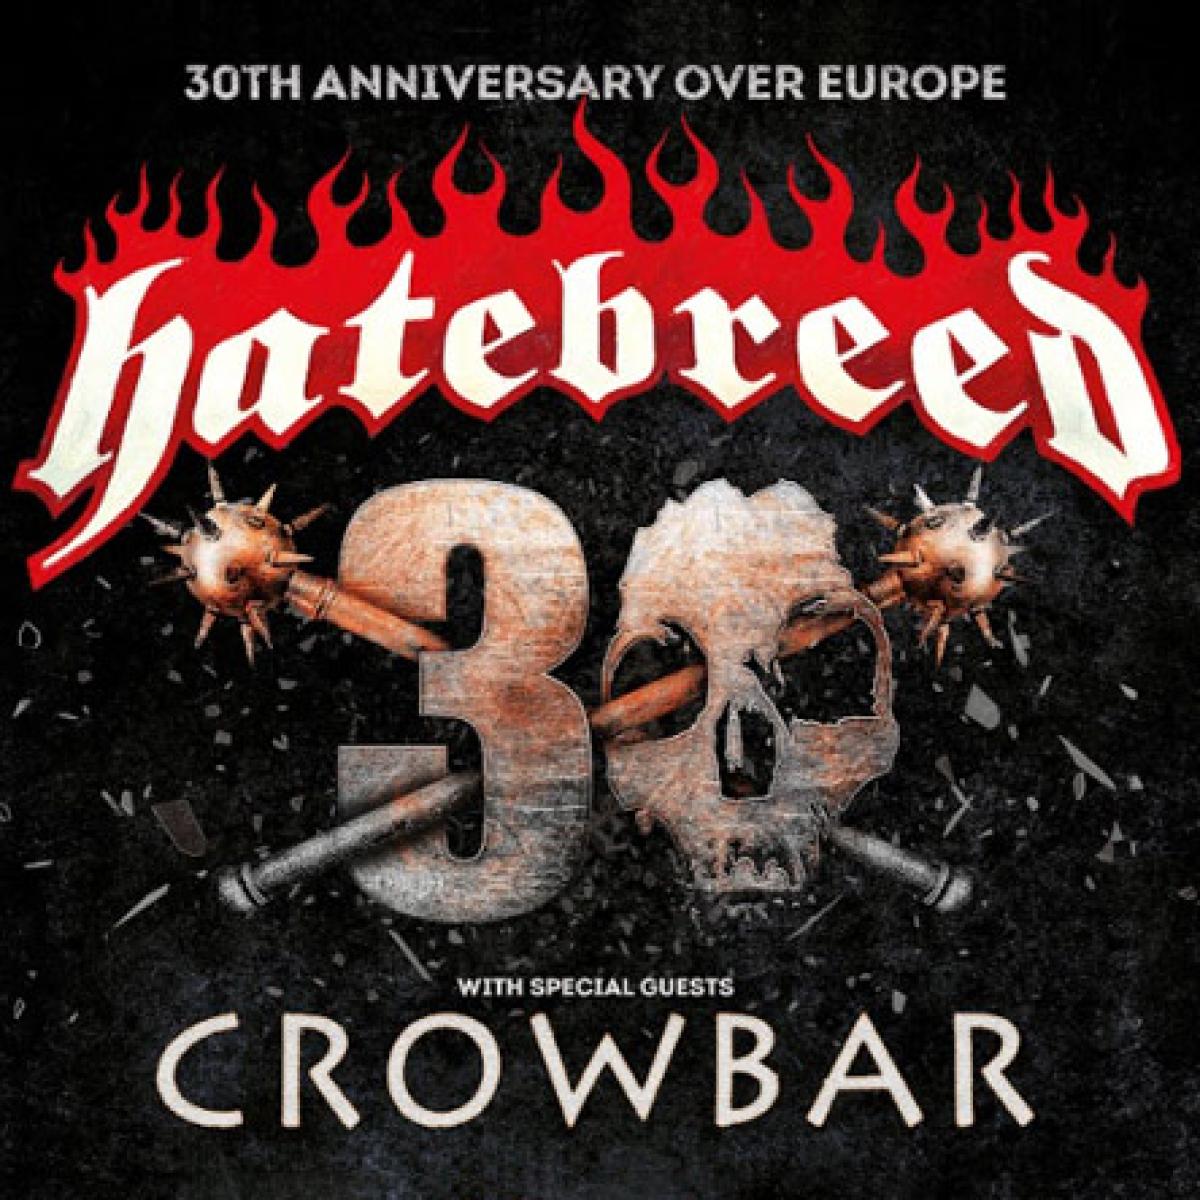 Hatebreed - Crowbar - 30th Anniversary Over Europe en Arena Wien Tickets